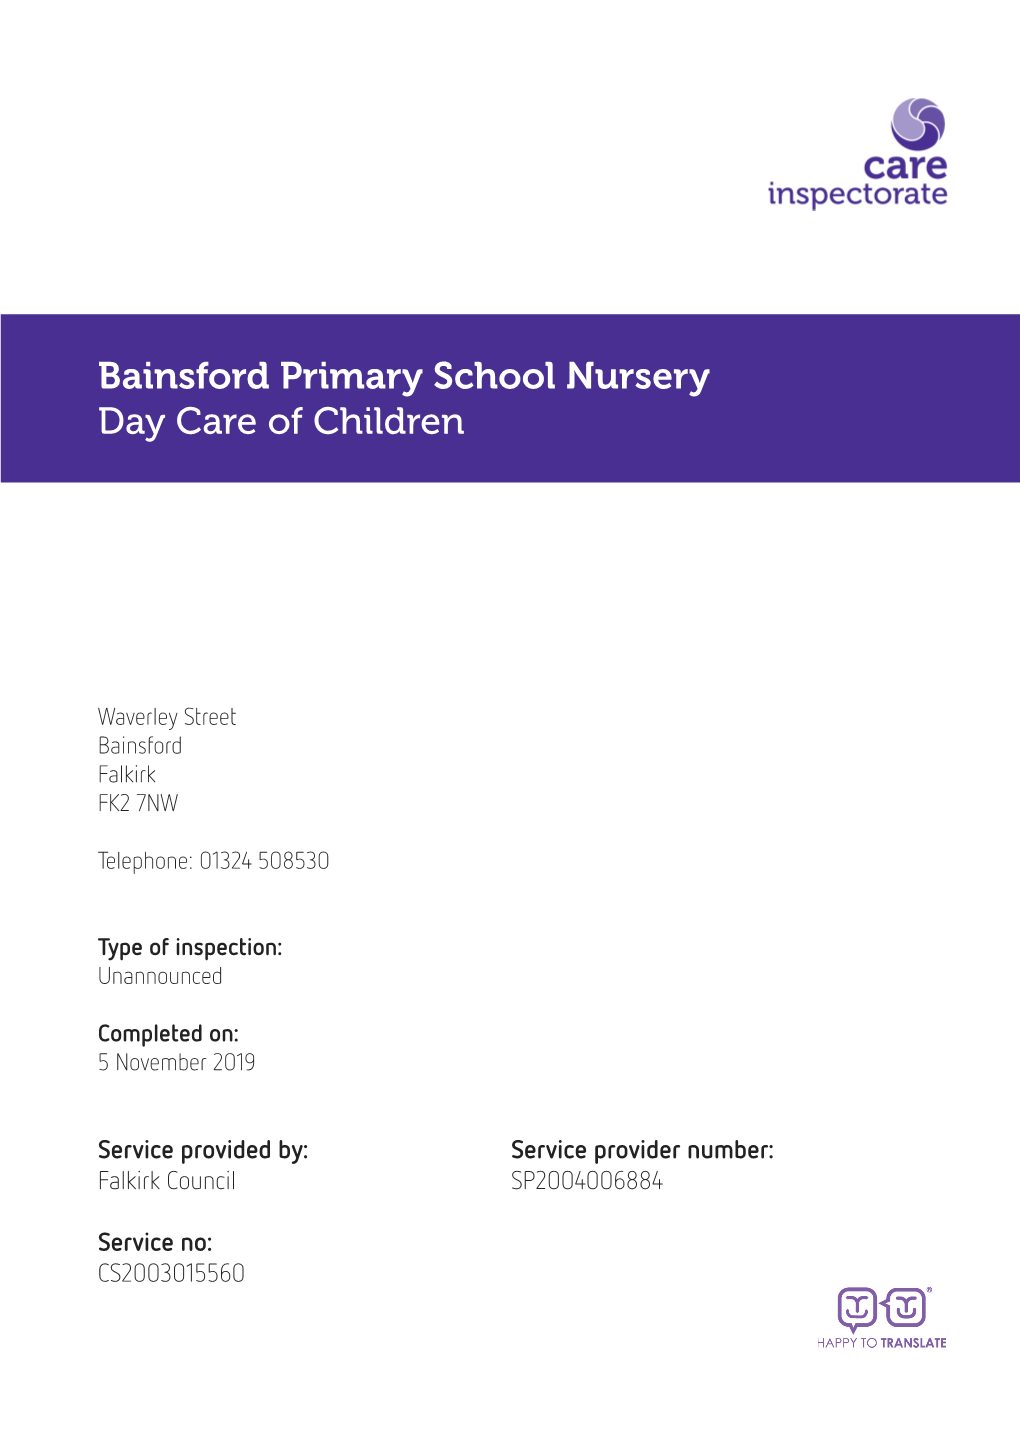 Bainsford Primary School Nursery Day Care of Children